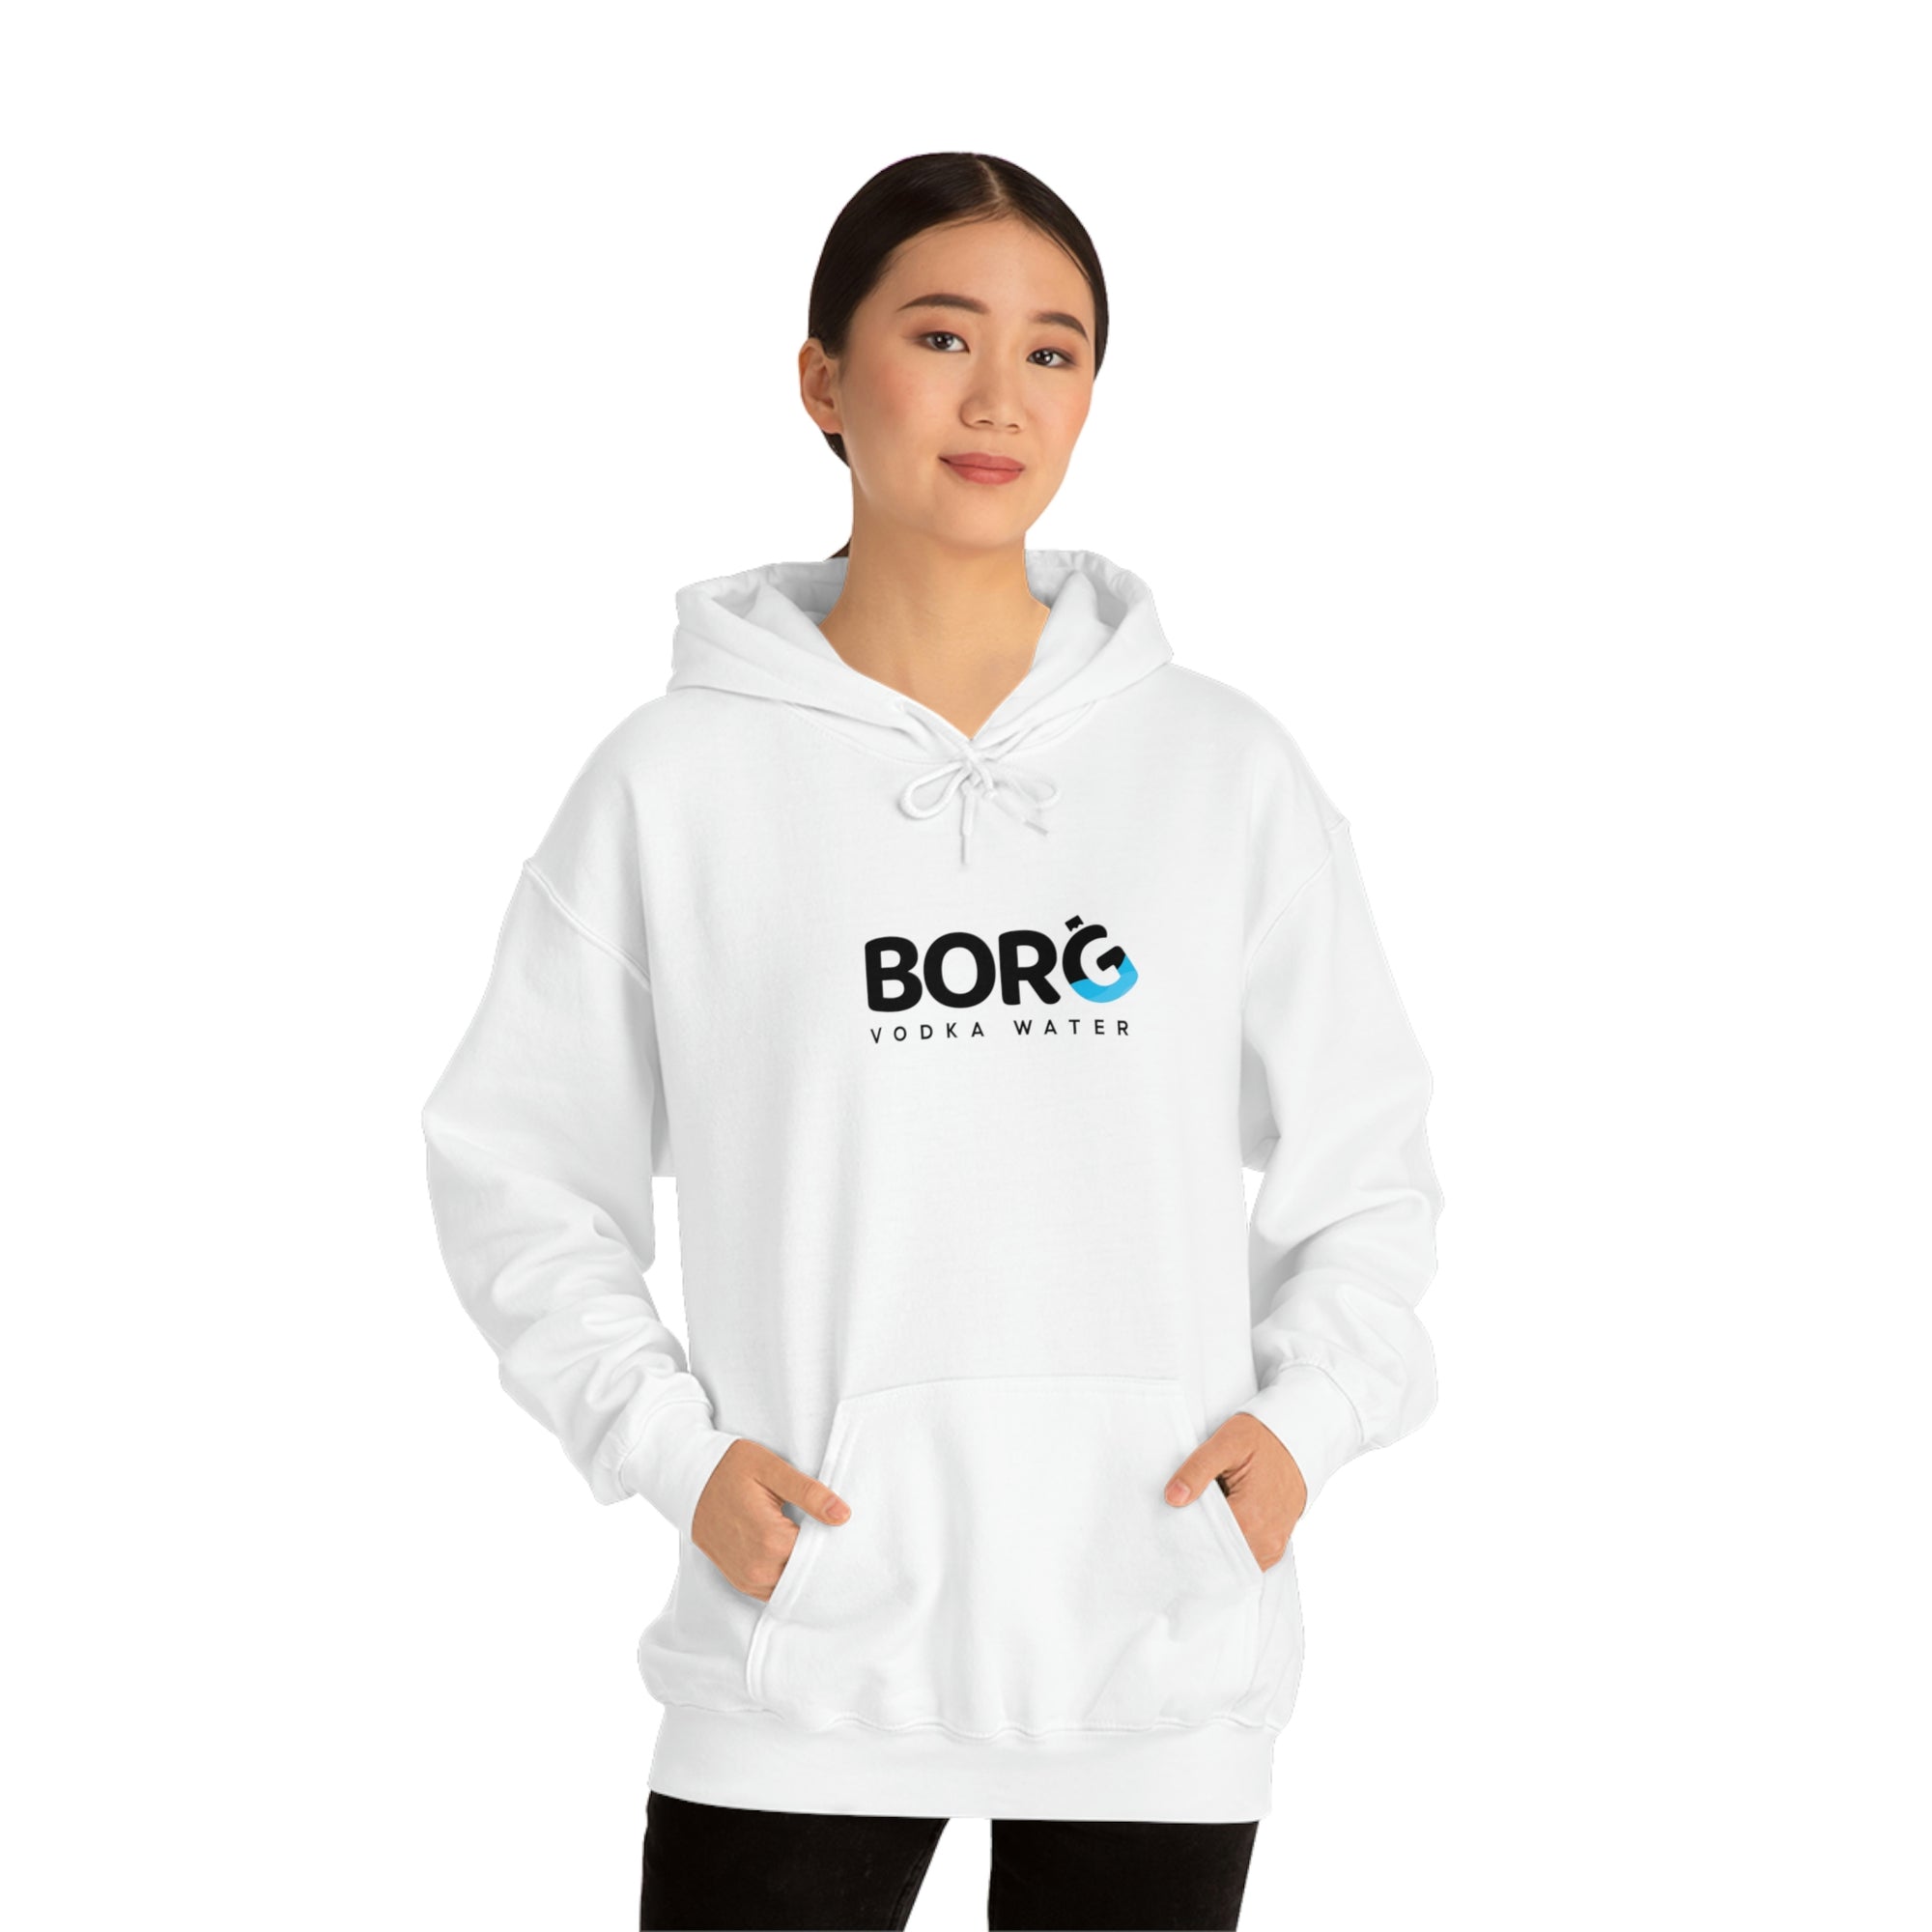  Girl wearing the white Borg hooded sweatshirt